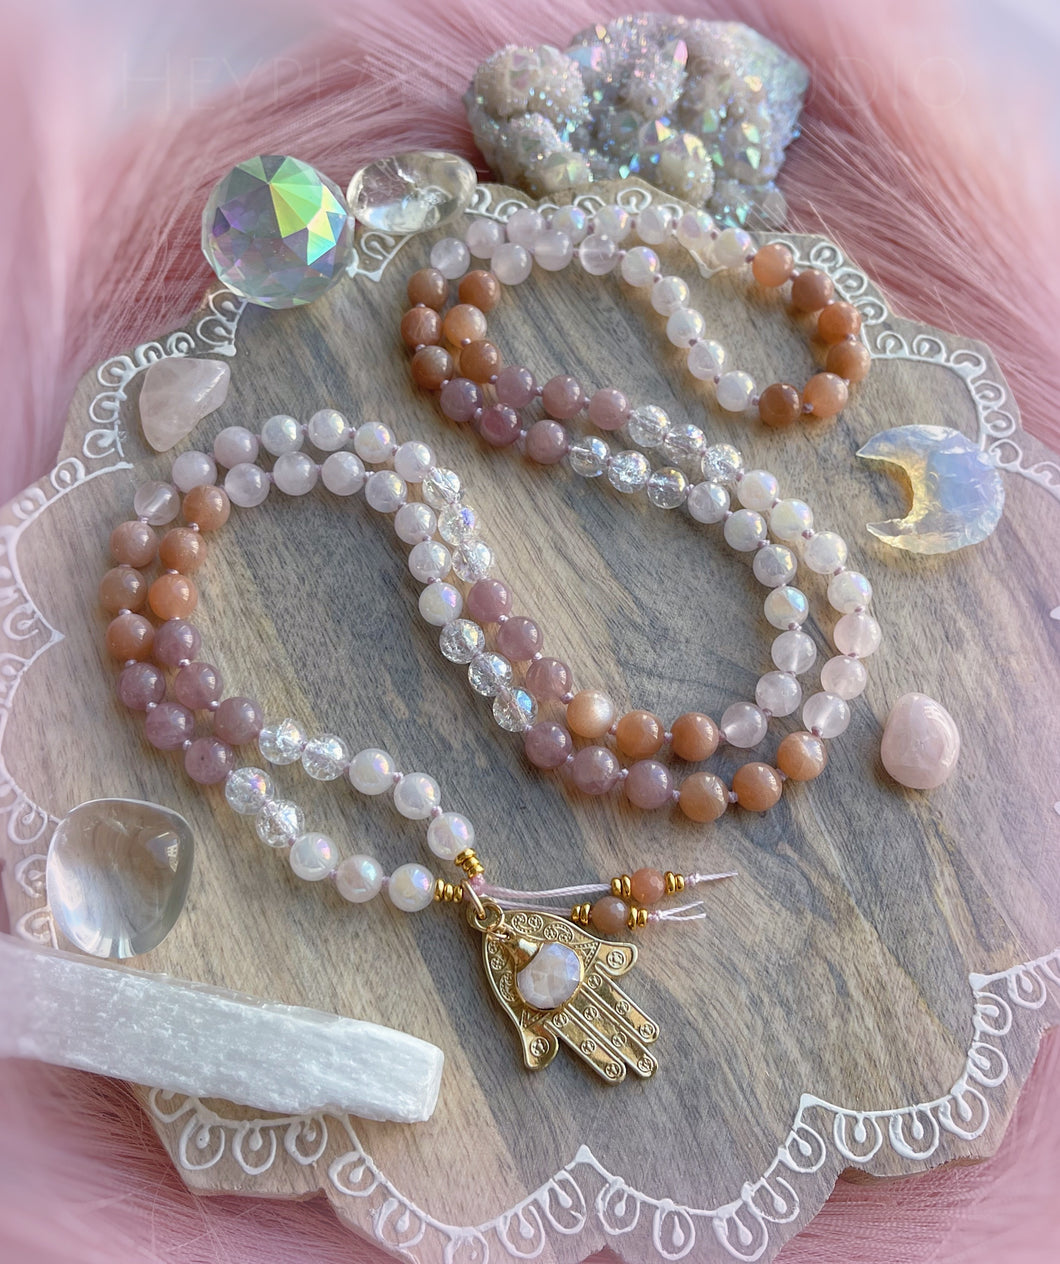 Goddess Within - 108 Mala Bead Necklace - 24k Gold Overlay Hamsa + Peach Moonstone